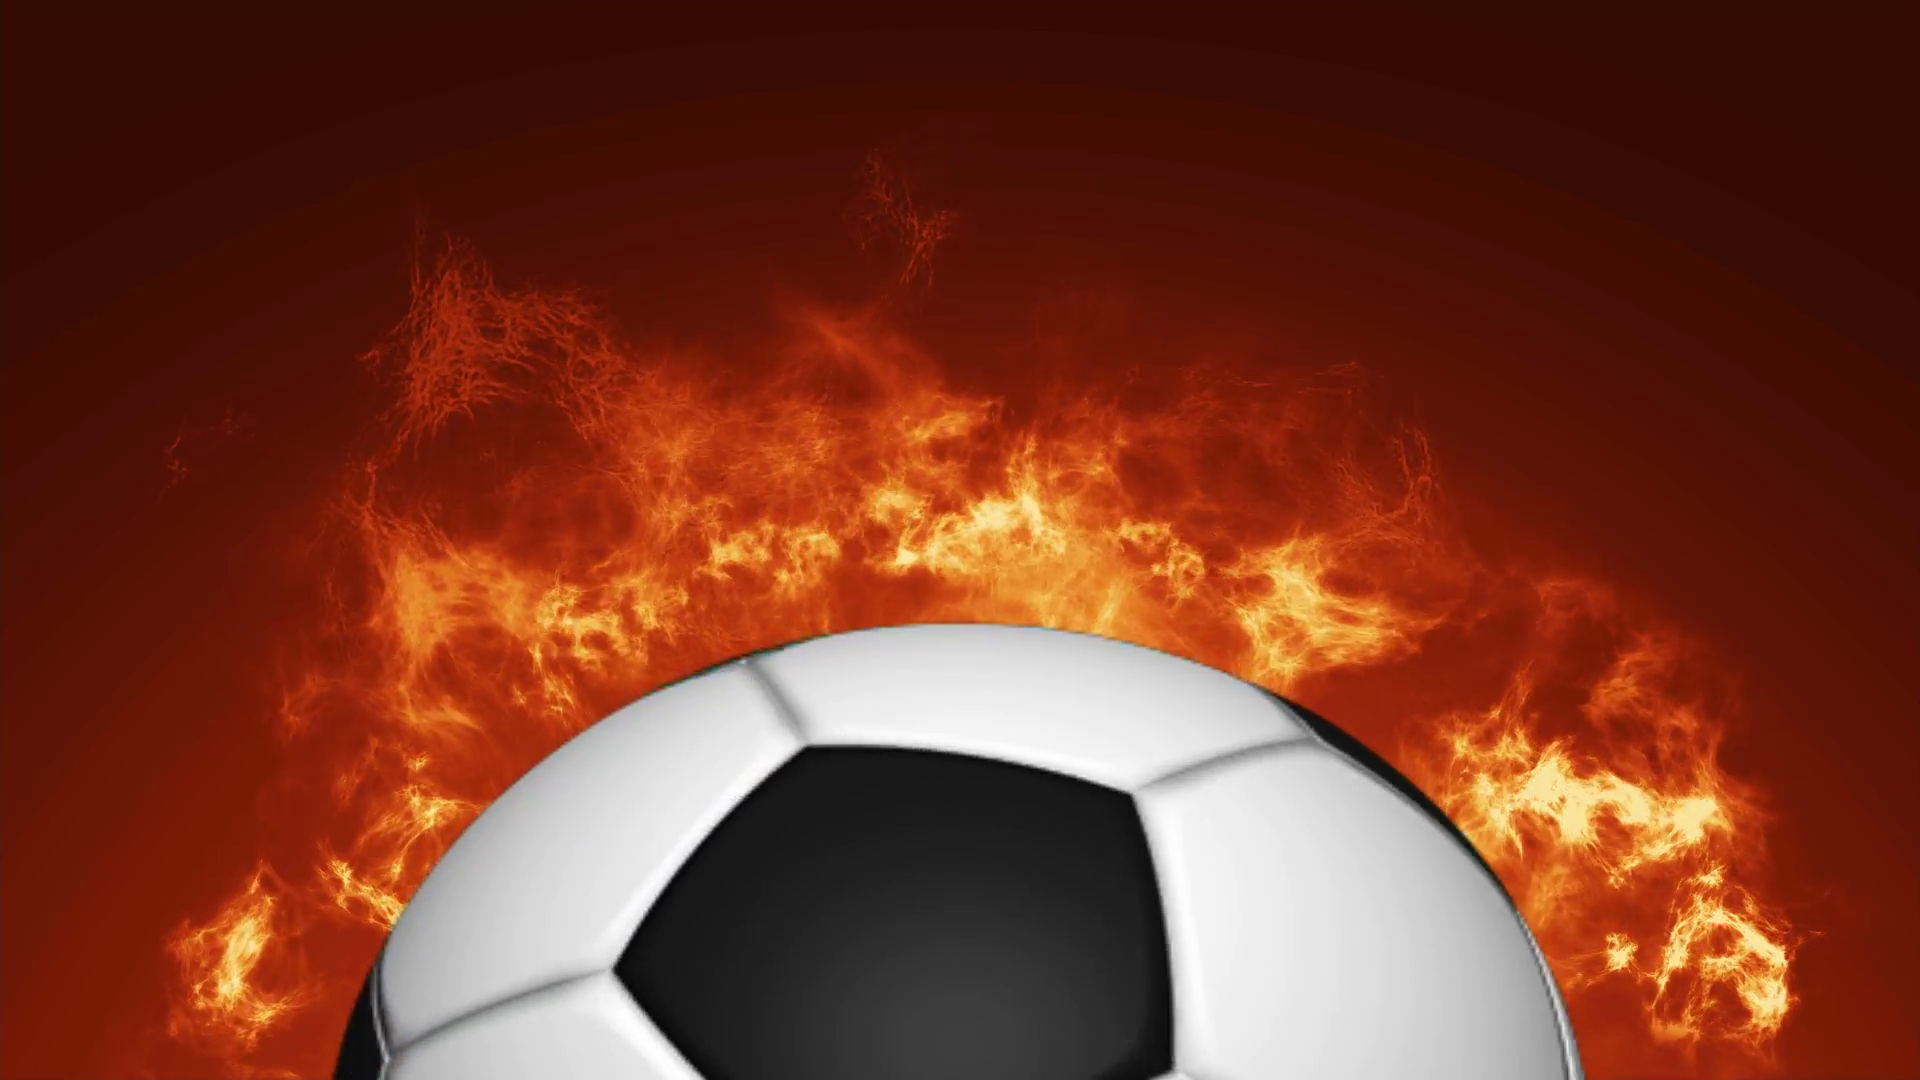 Soccer Ball on Fire Animation Motion Background - Videoblocks